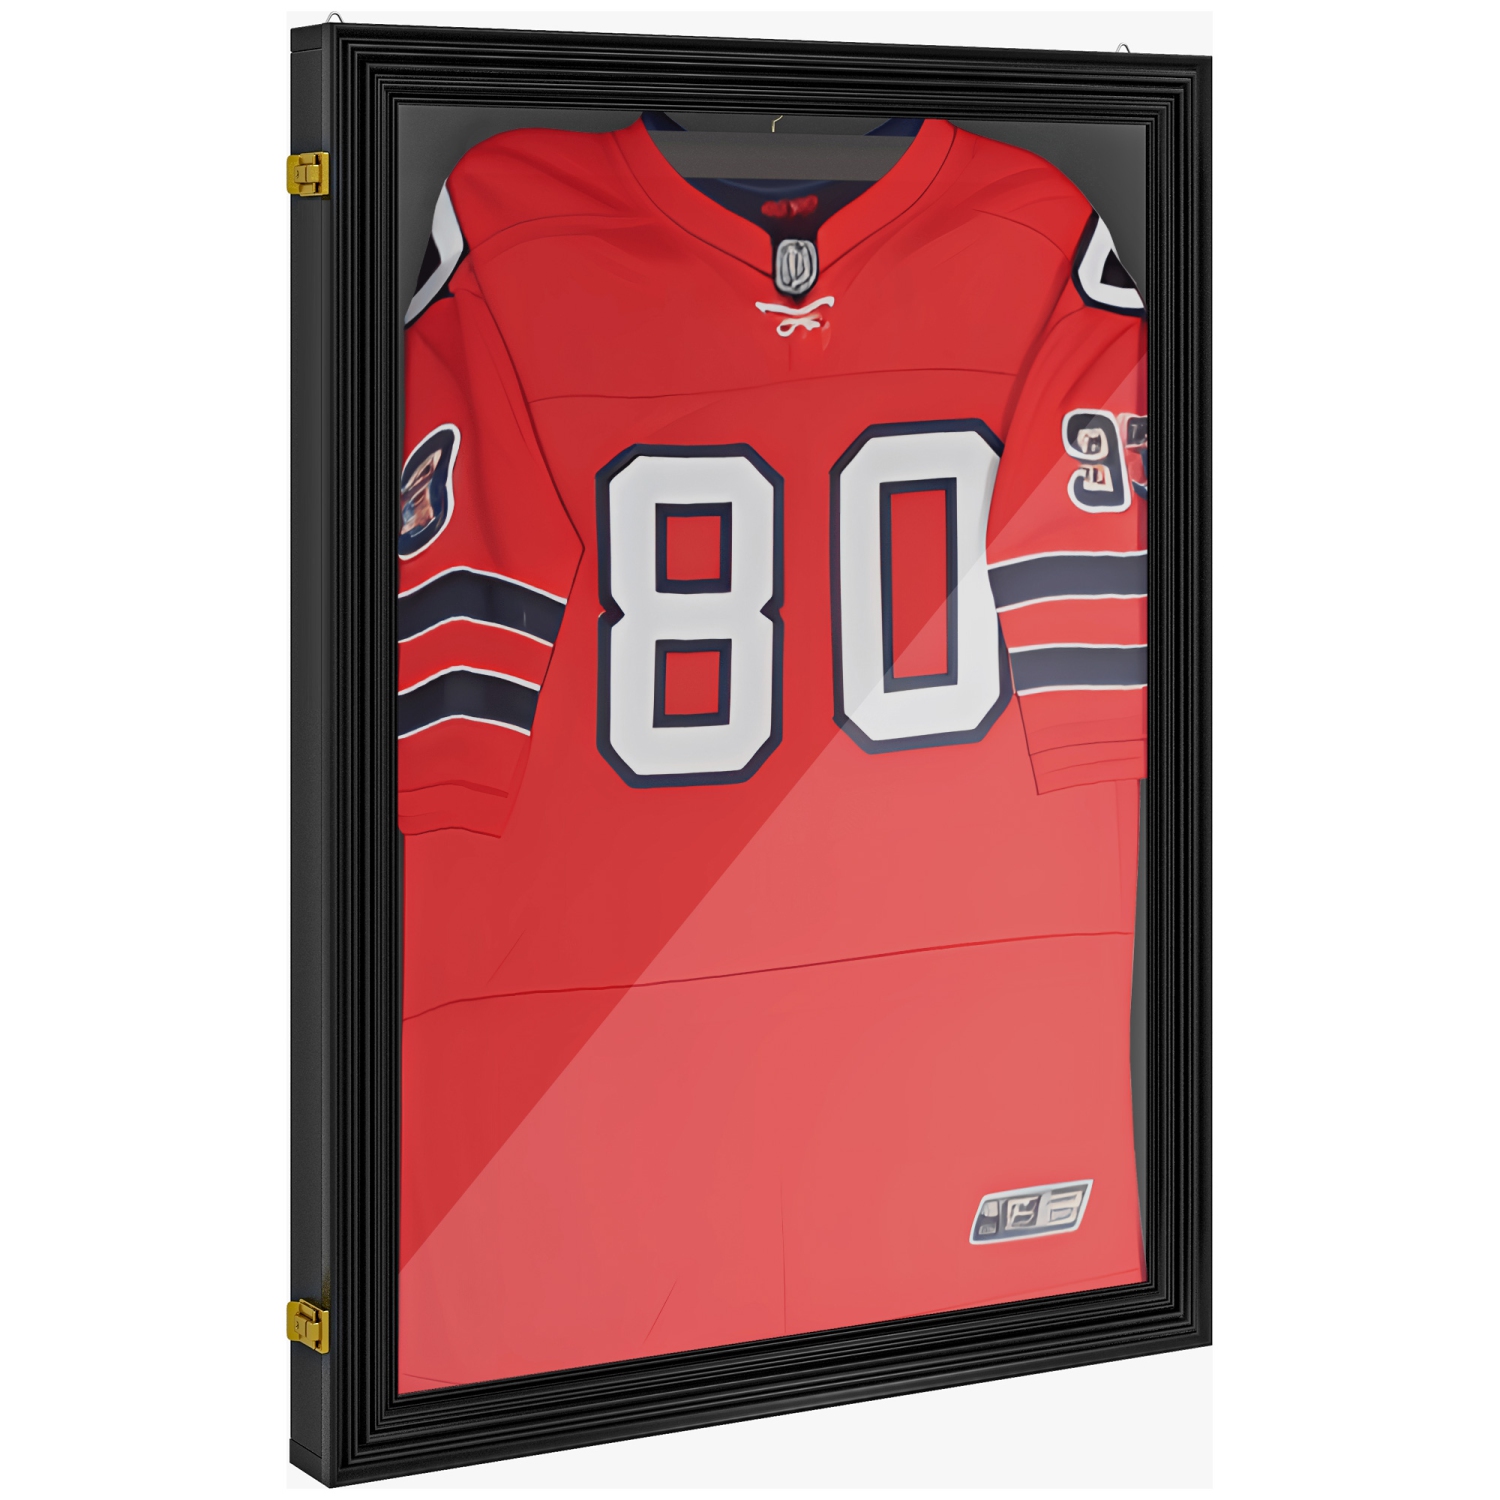 HOMCOM Jersey Display Frame Case, Acrylic Sports Shirt Shadow Box for Basketball Football Baseball (Black, 23.5" W x 31.5" H)